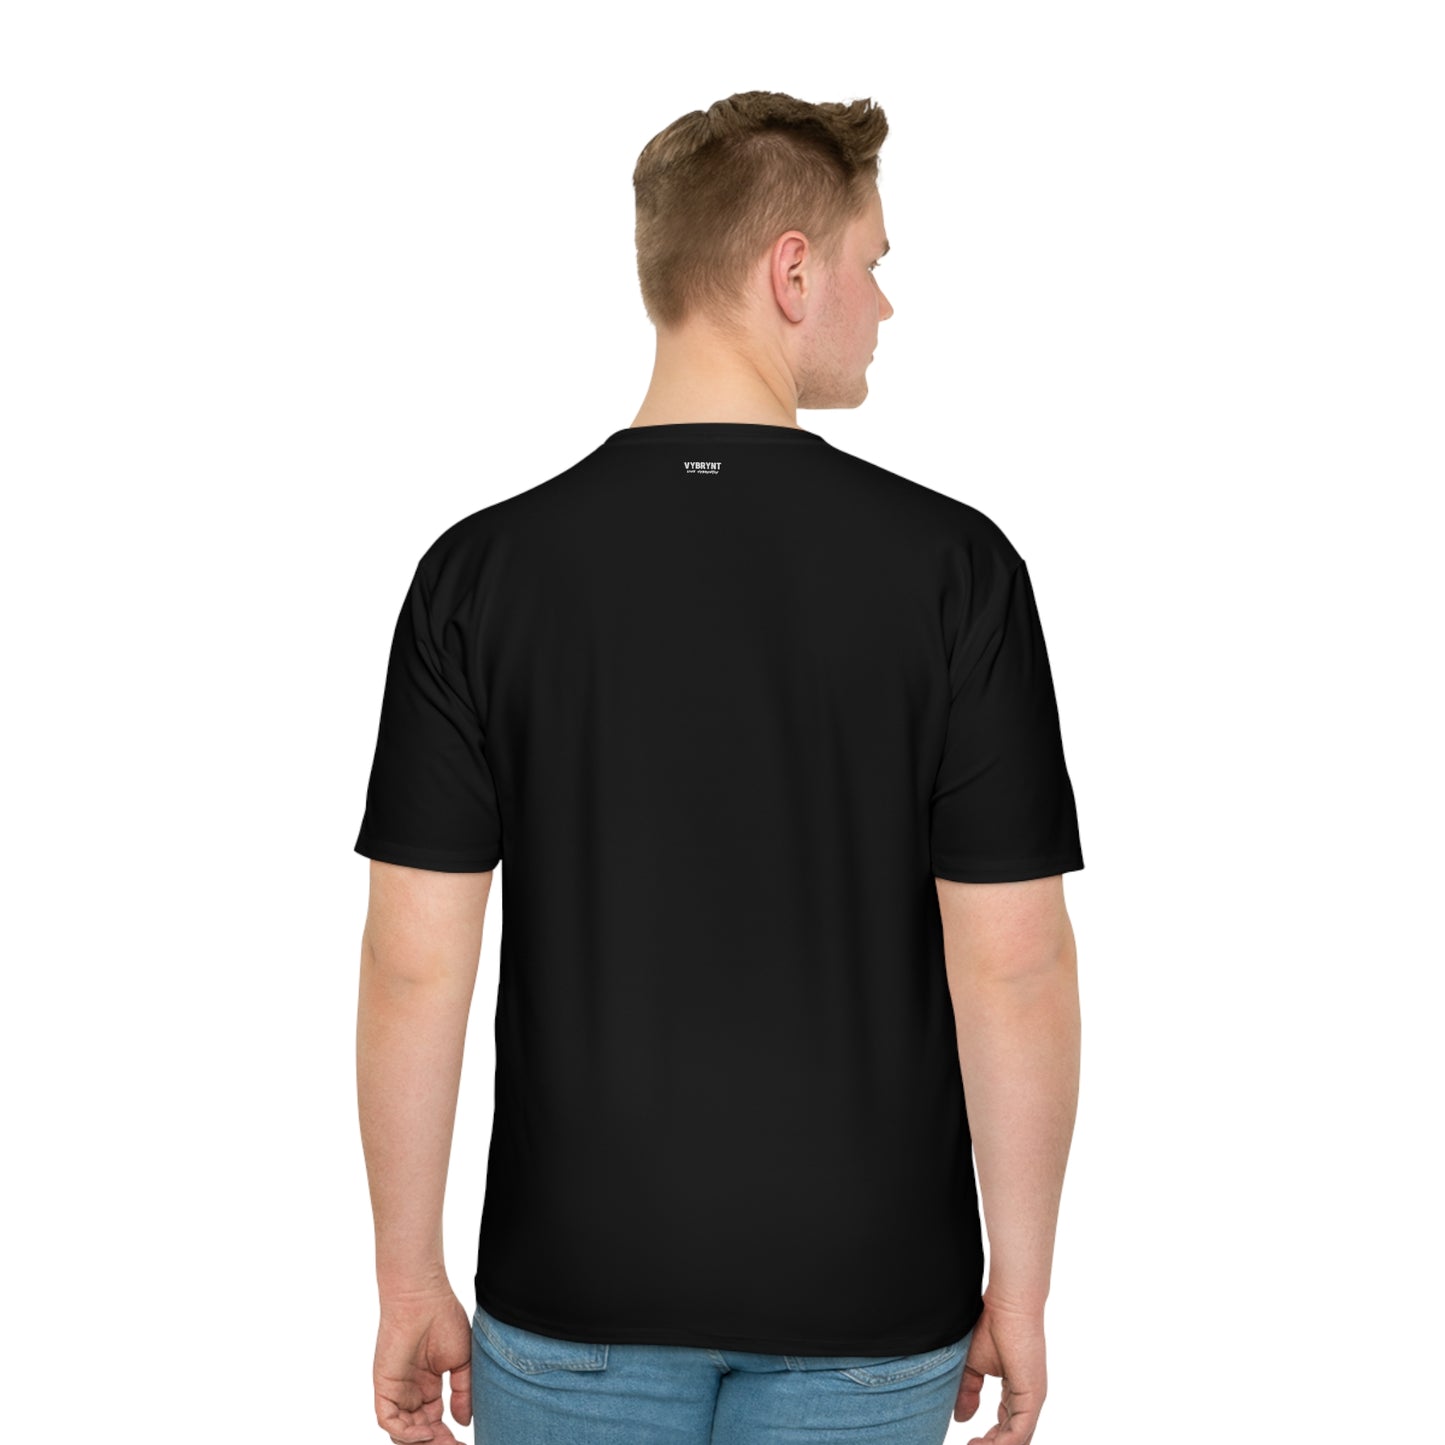 Bigwheel Retro Racer Men's Black T-shirt